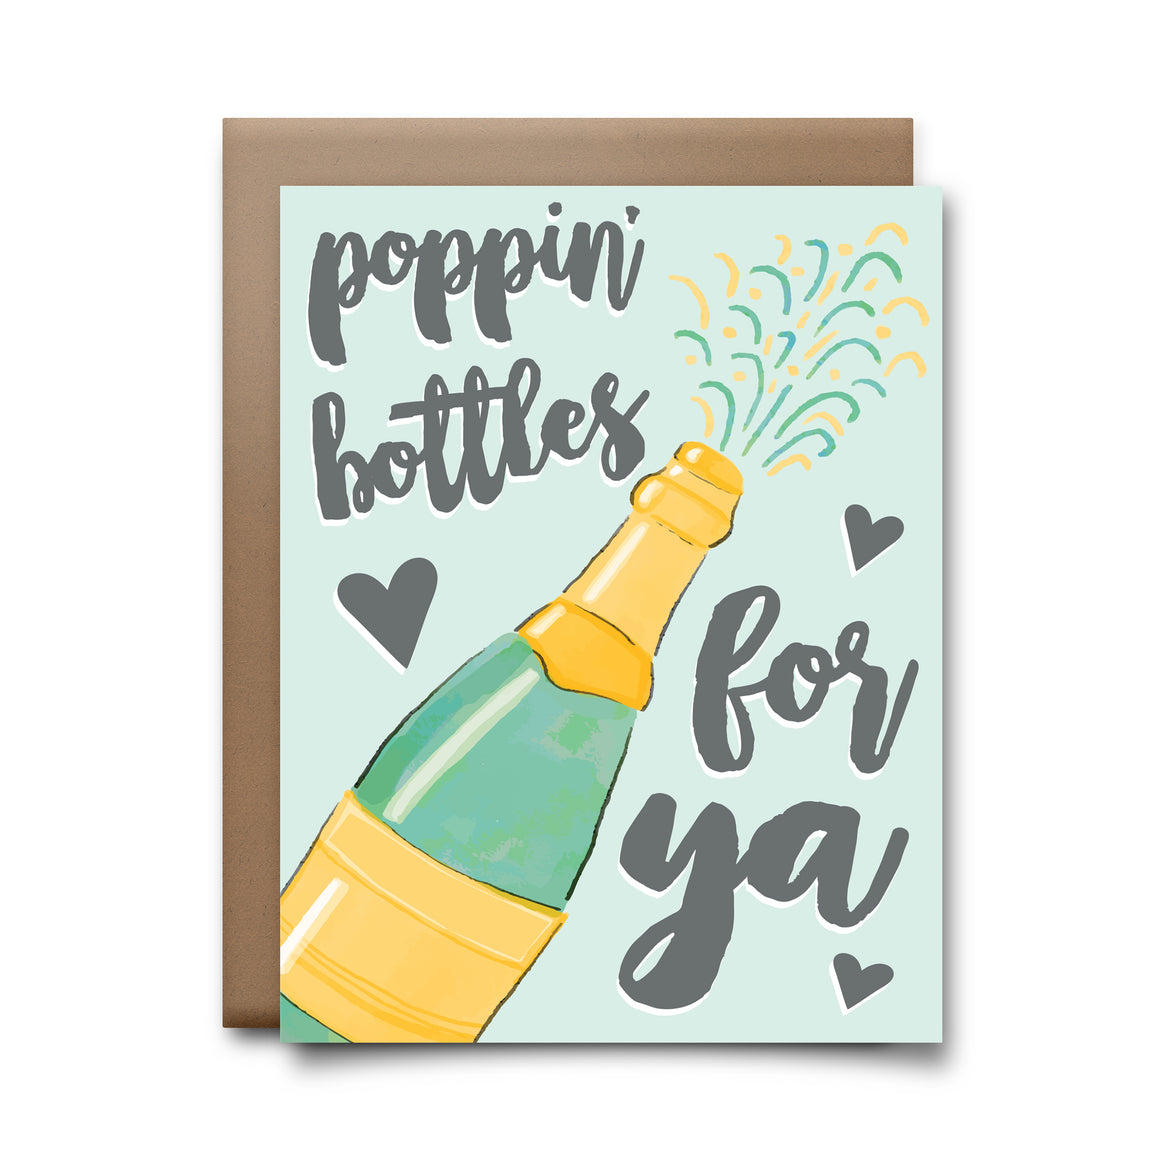 poppin bottles | greeting card